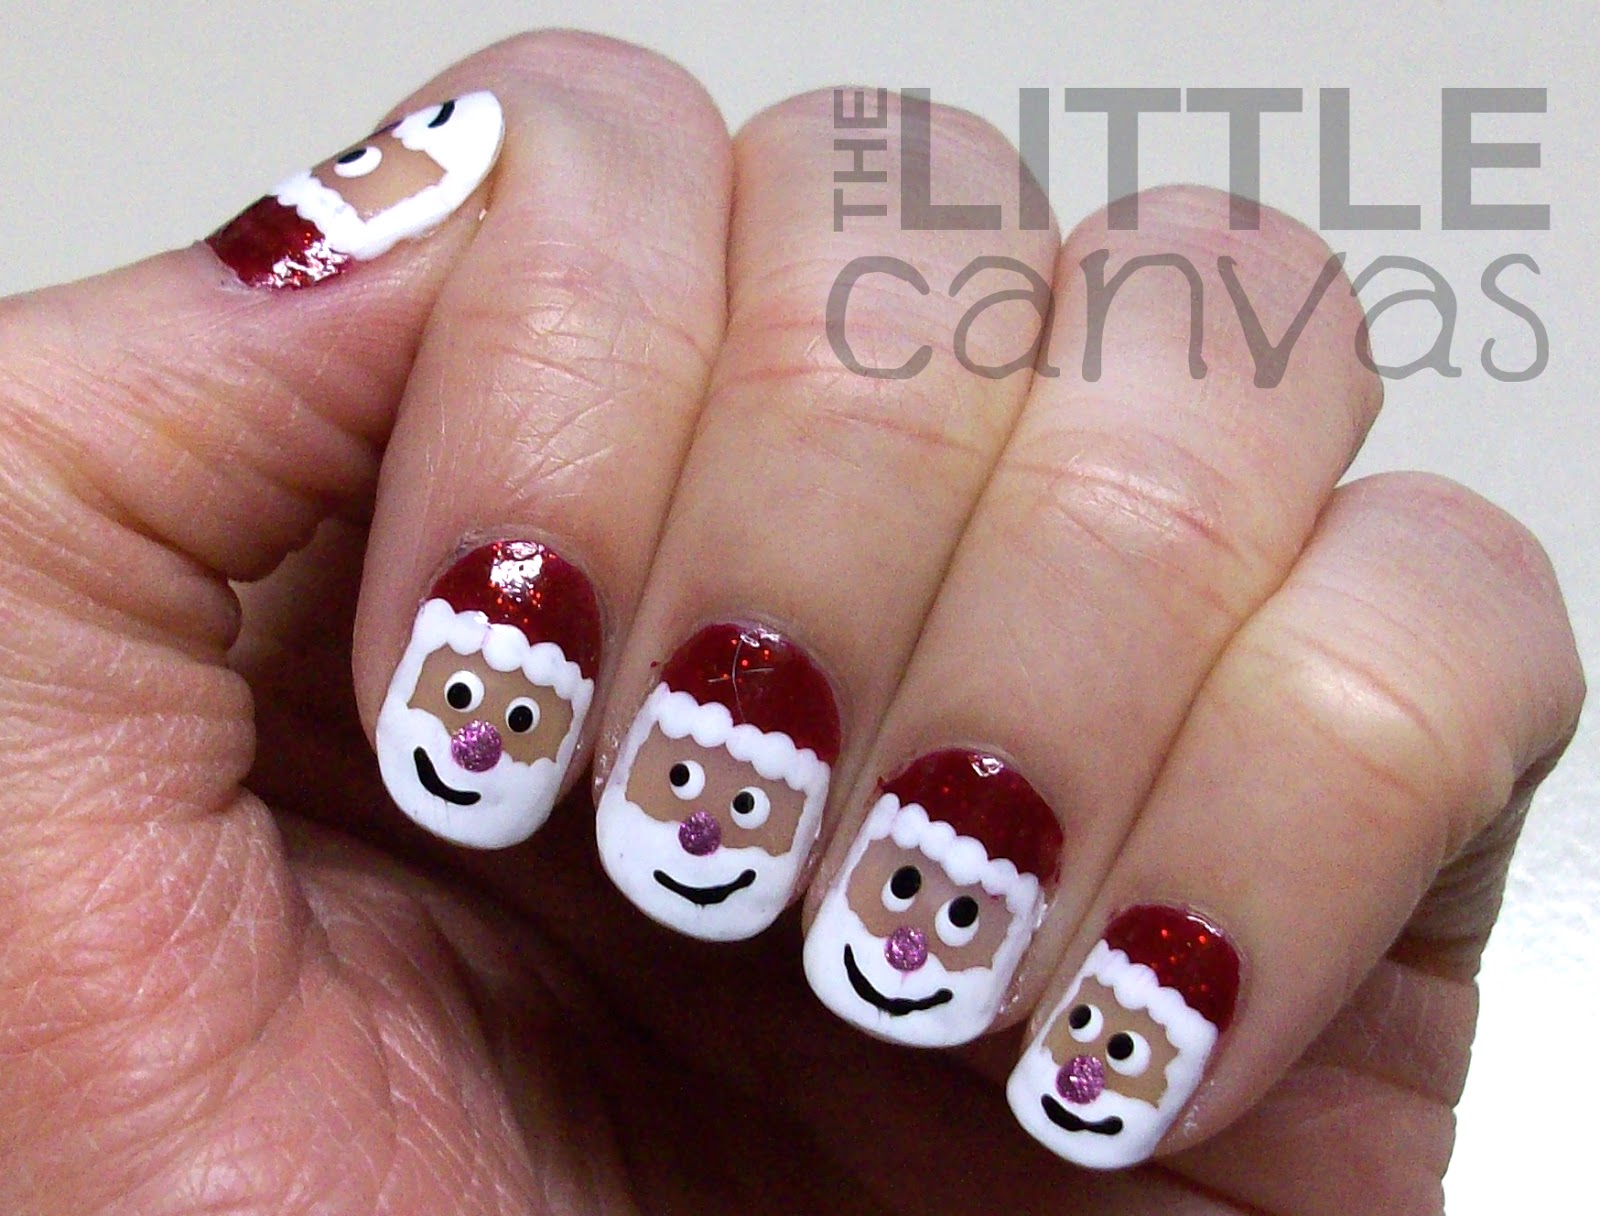 3. Festive Santa Claus Nails - wide 6